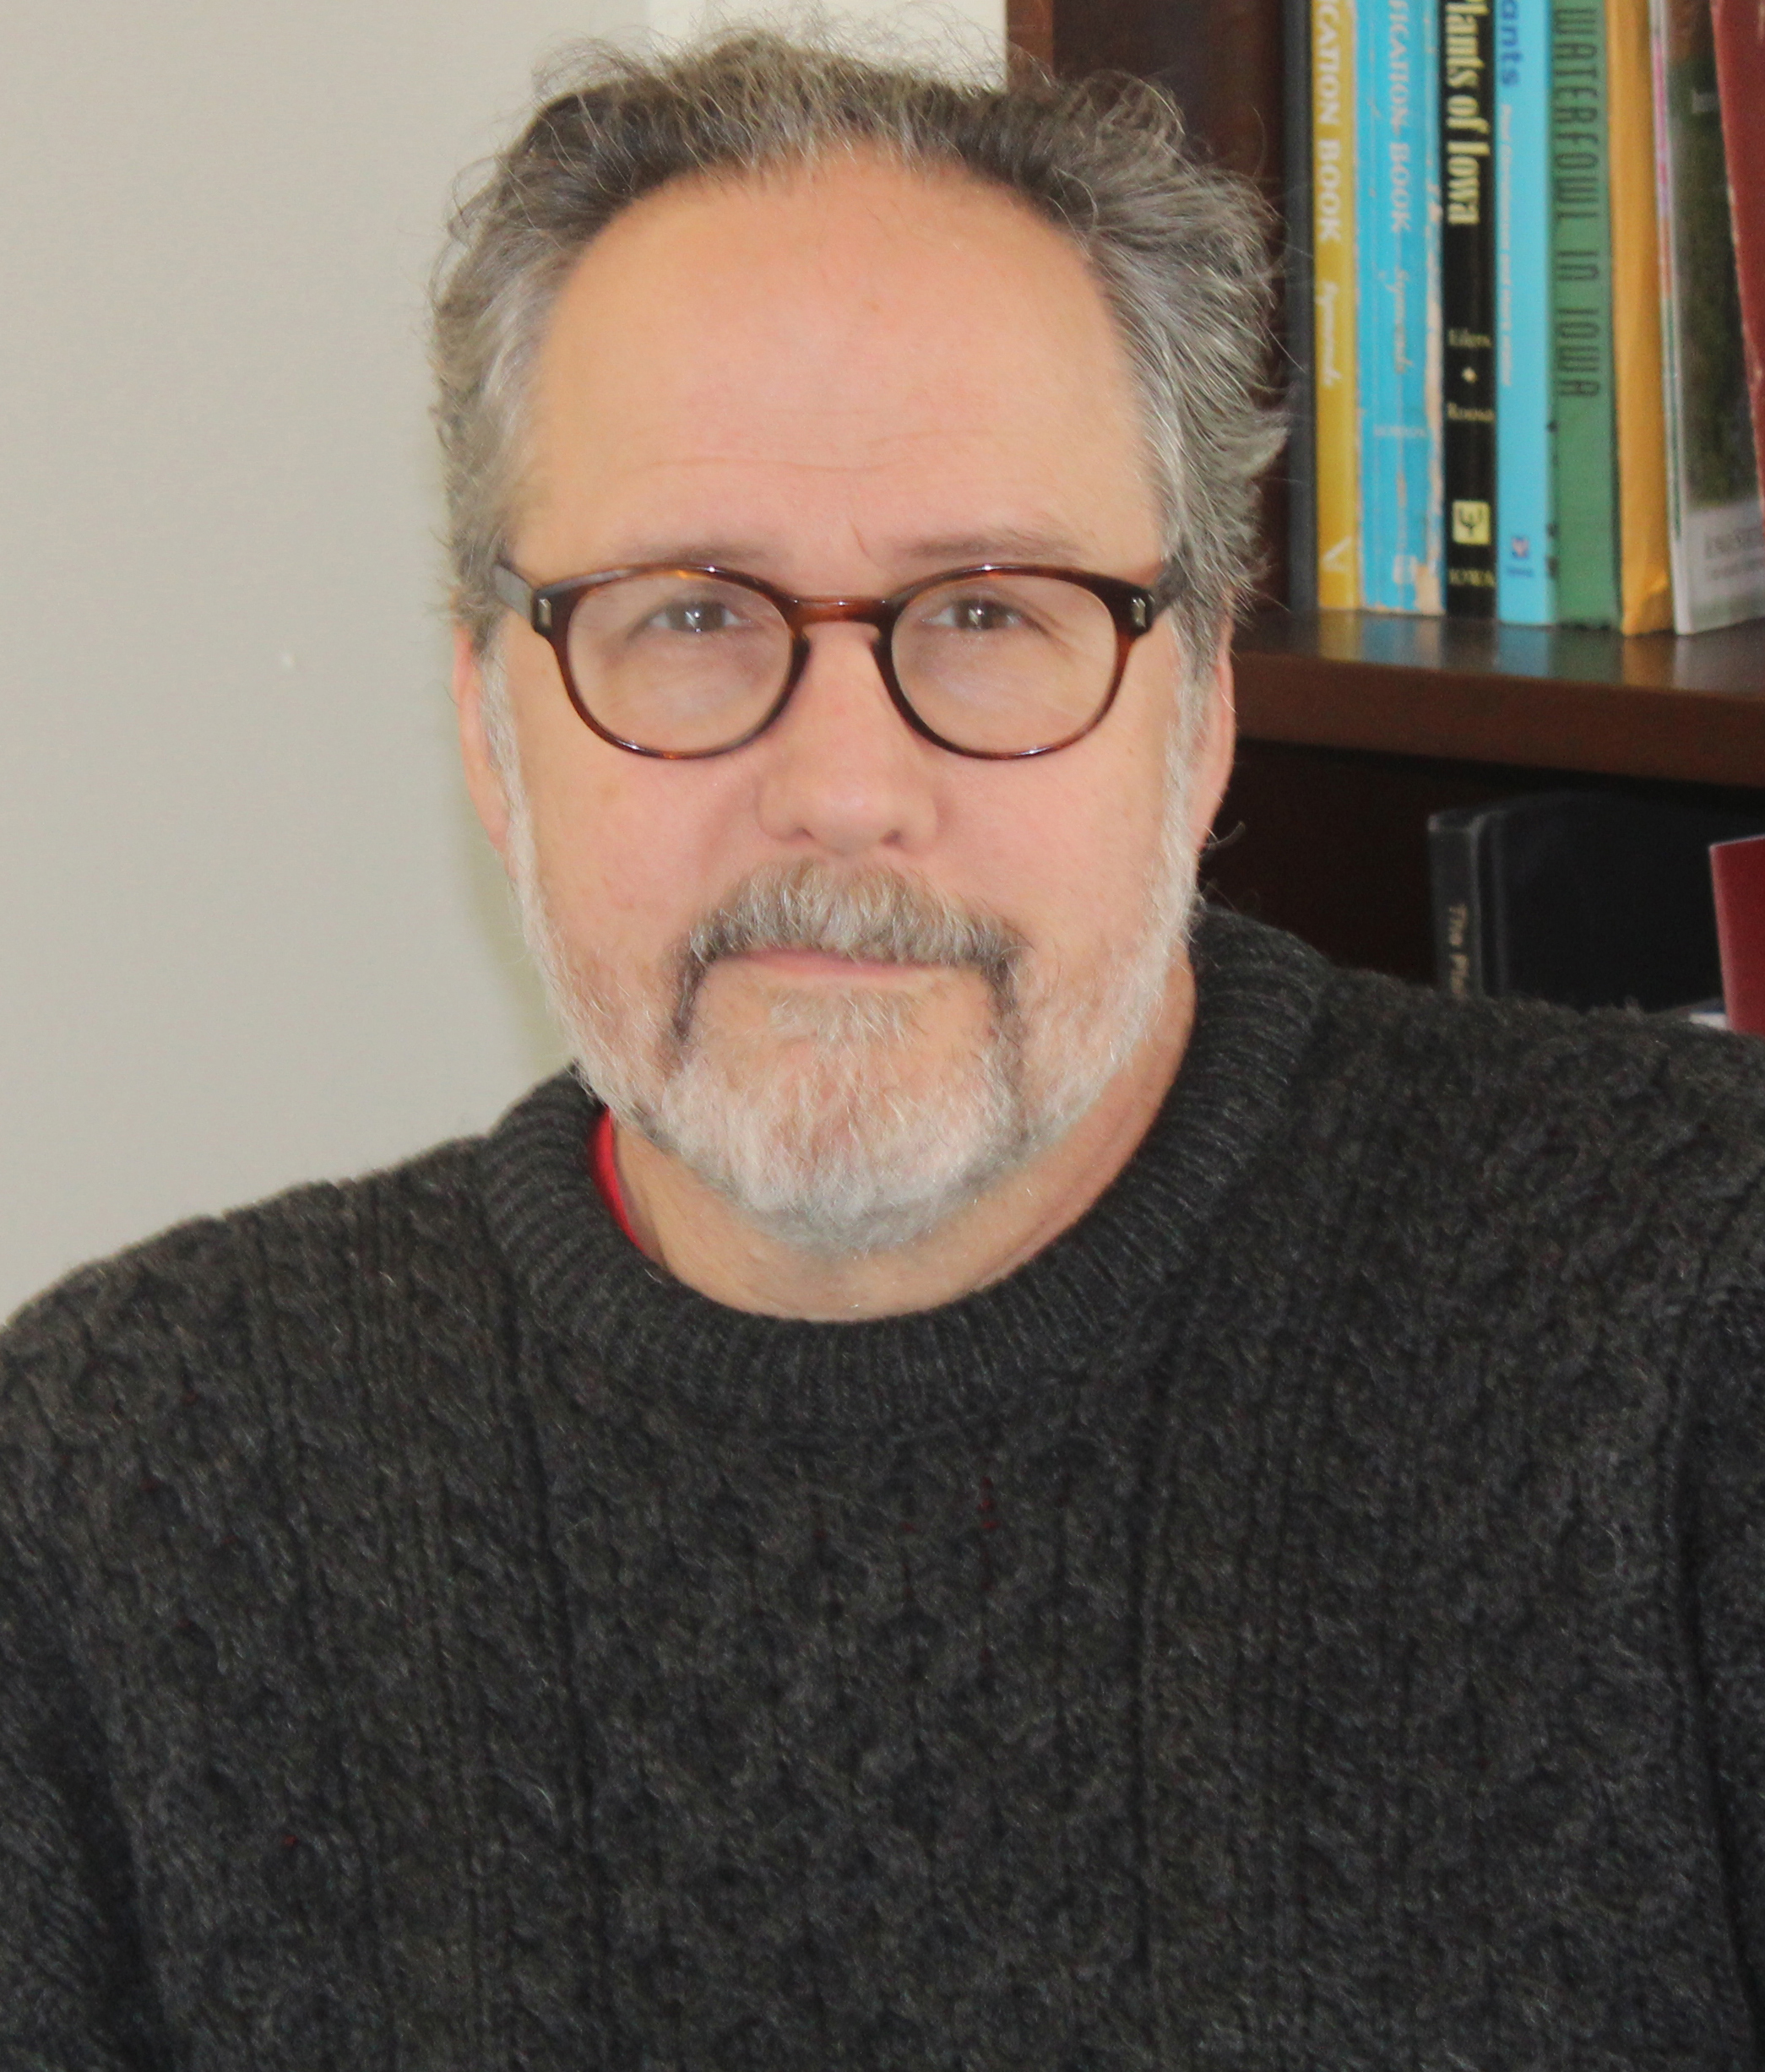 Portrait image of editor Mark Baechtel.